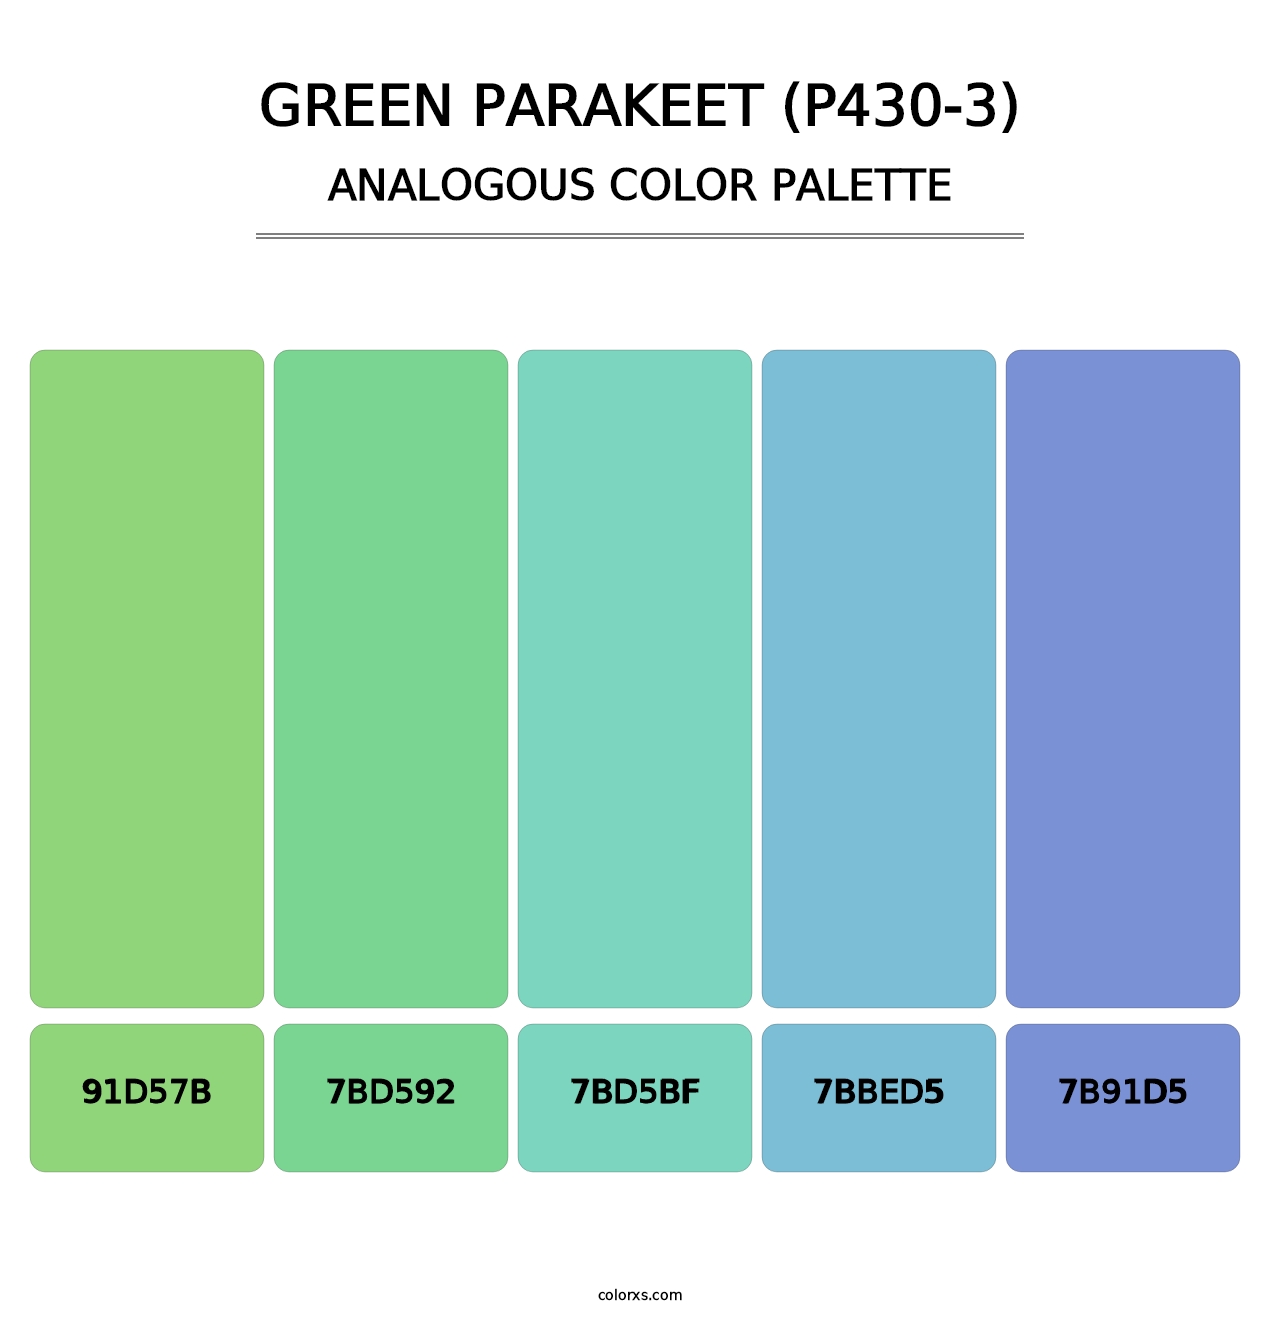 Green Parakeet (P430-3) - Analogous Color Palette